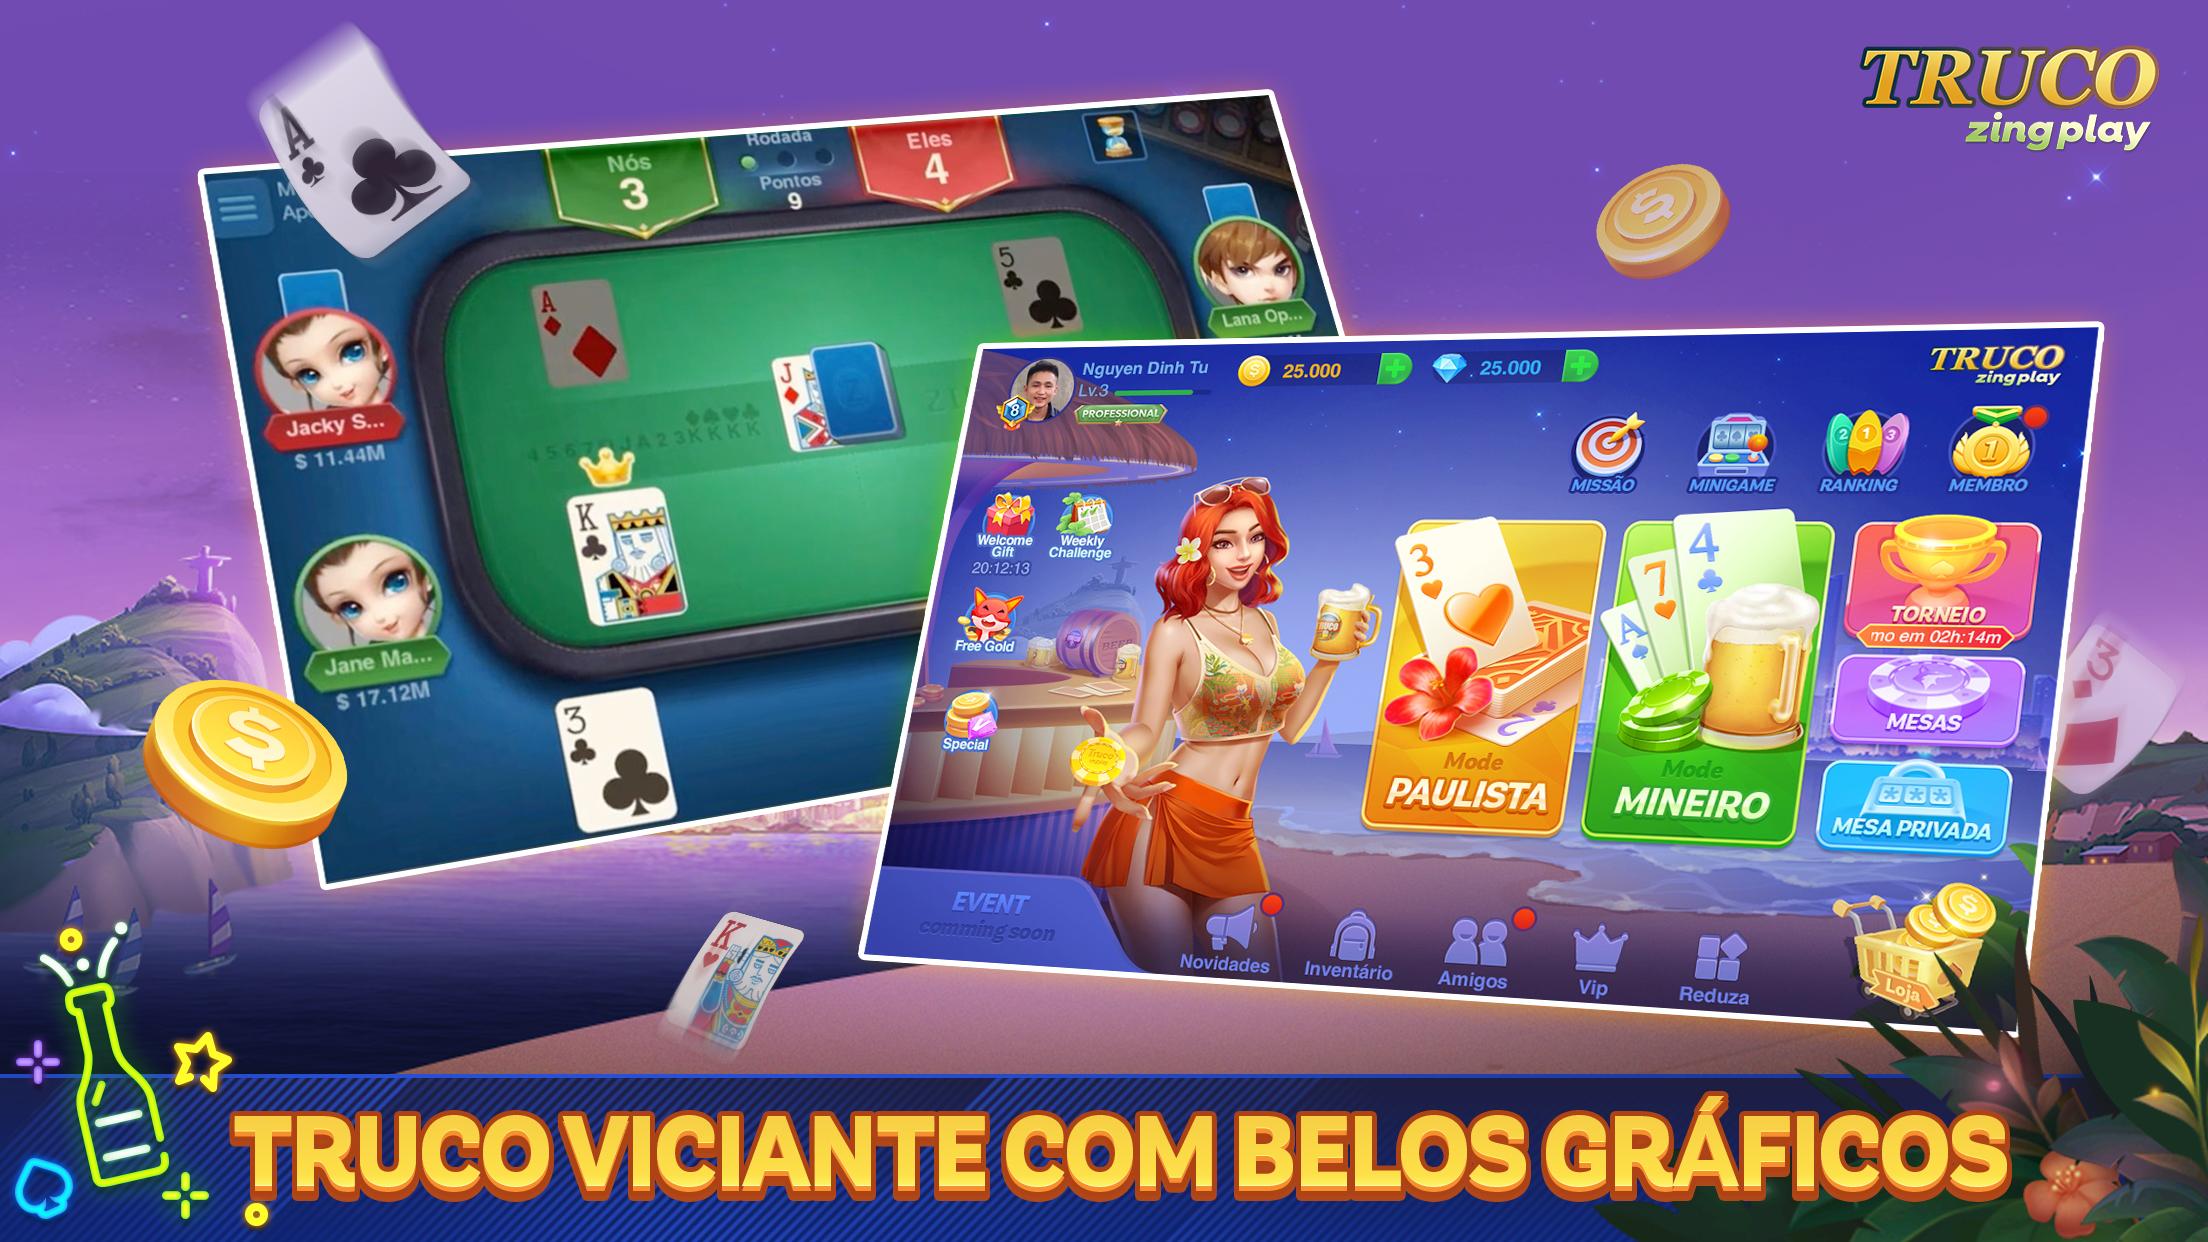 Truco Pocket : Truco Mineiro para Android - Download